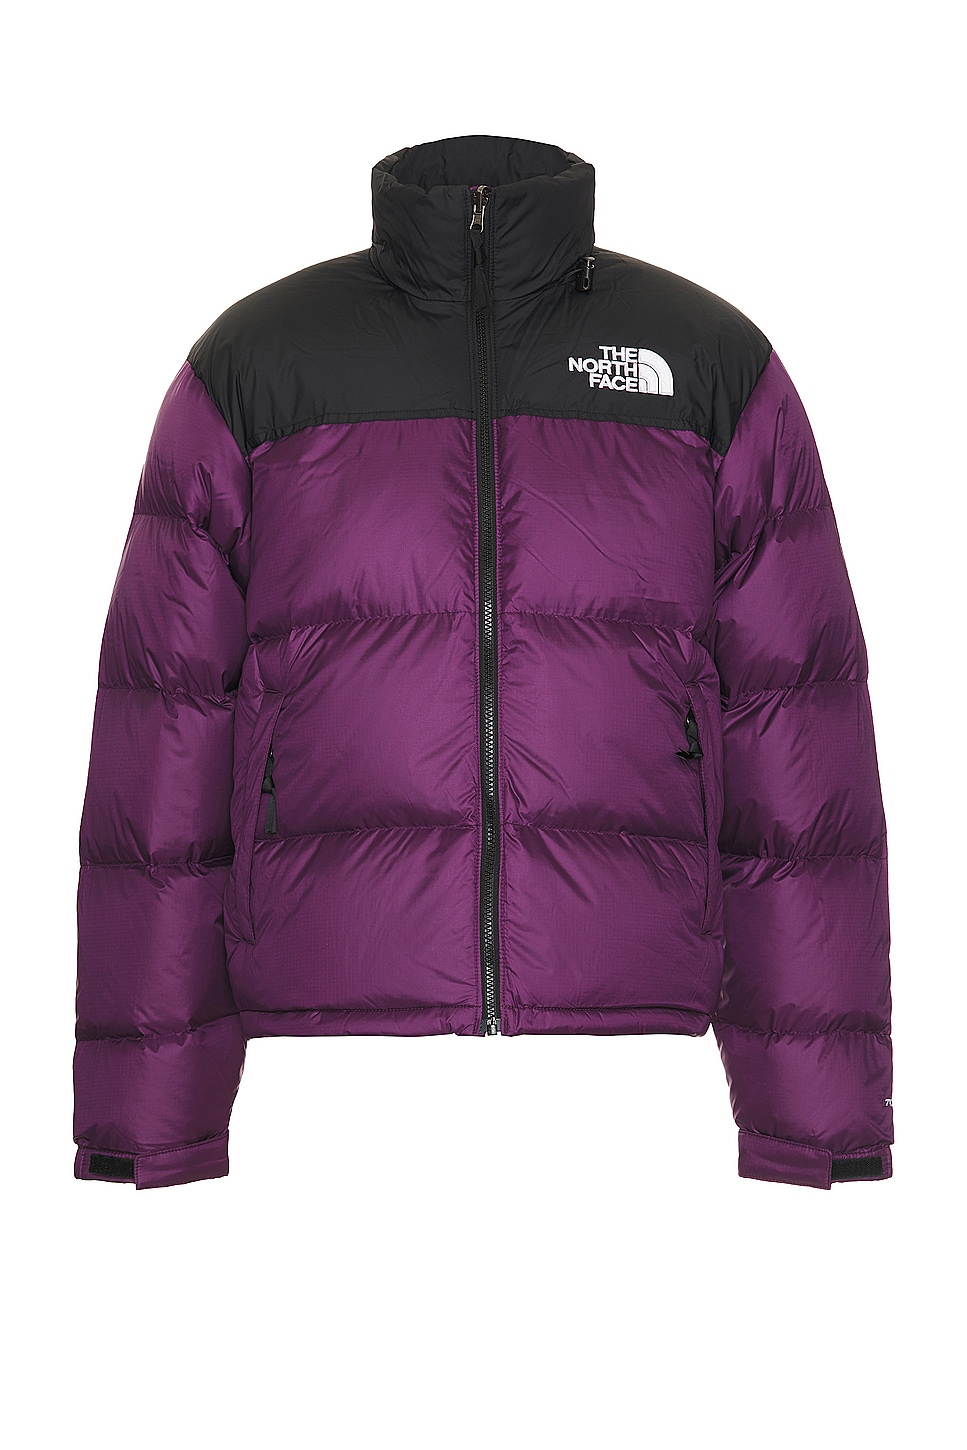 Image 1 of The North Face 1996 Retro Nuptse Jacket in Black Currant Purple